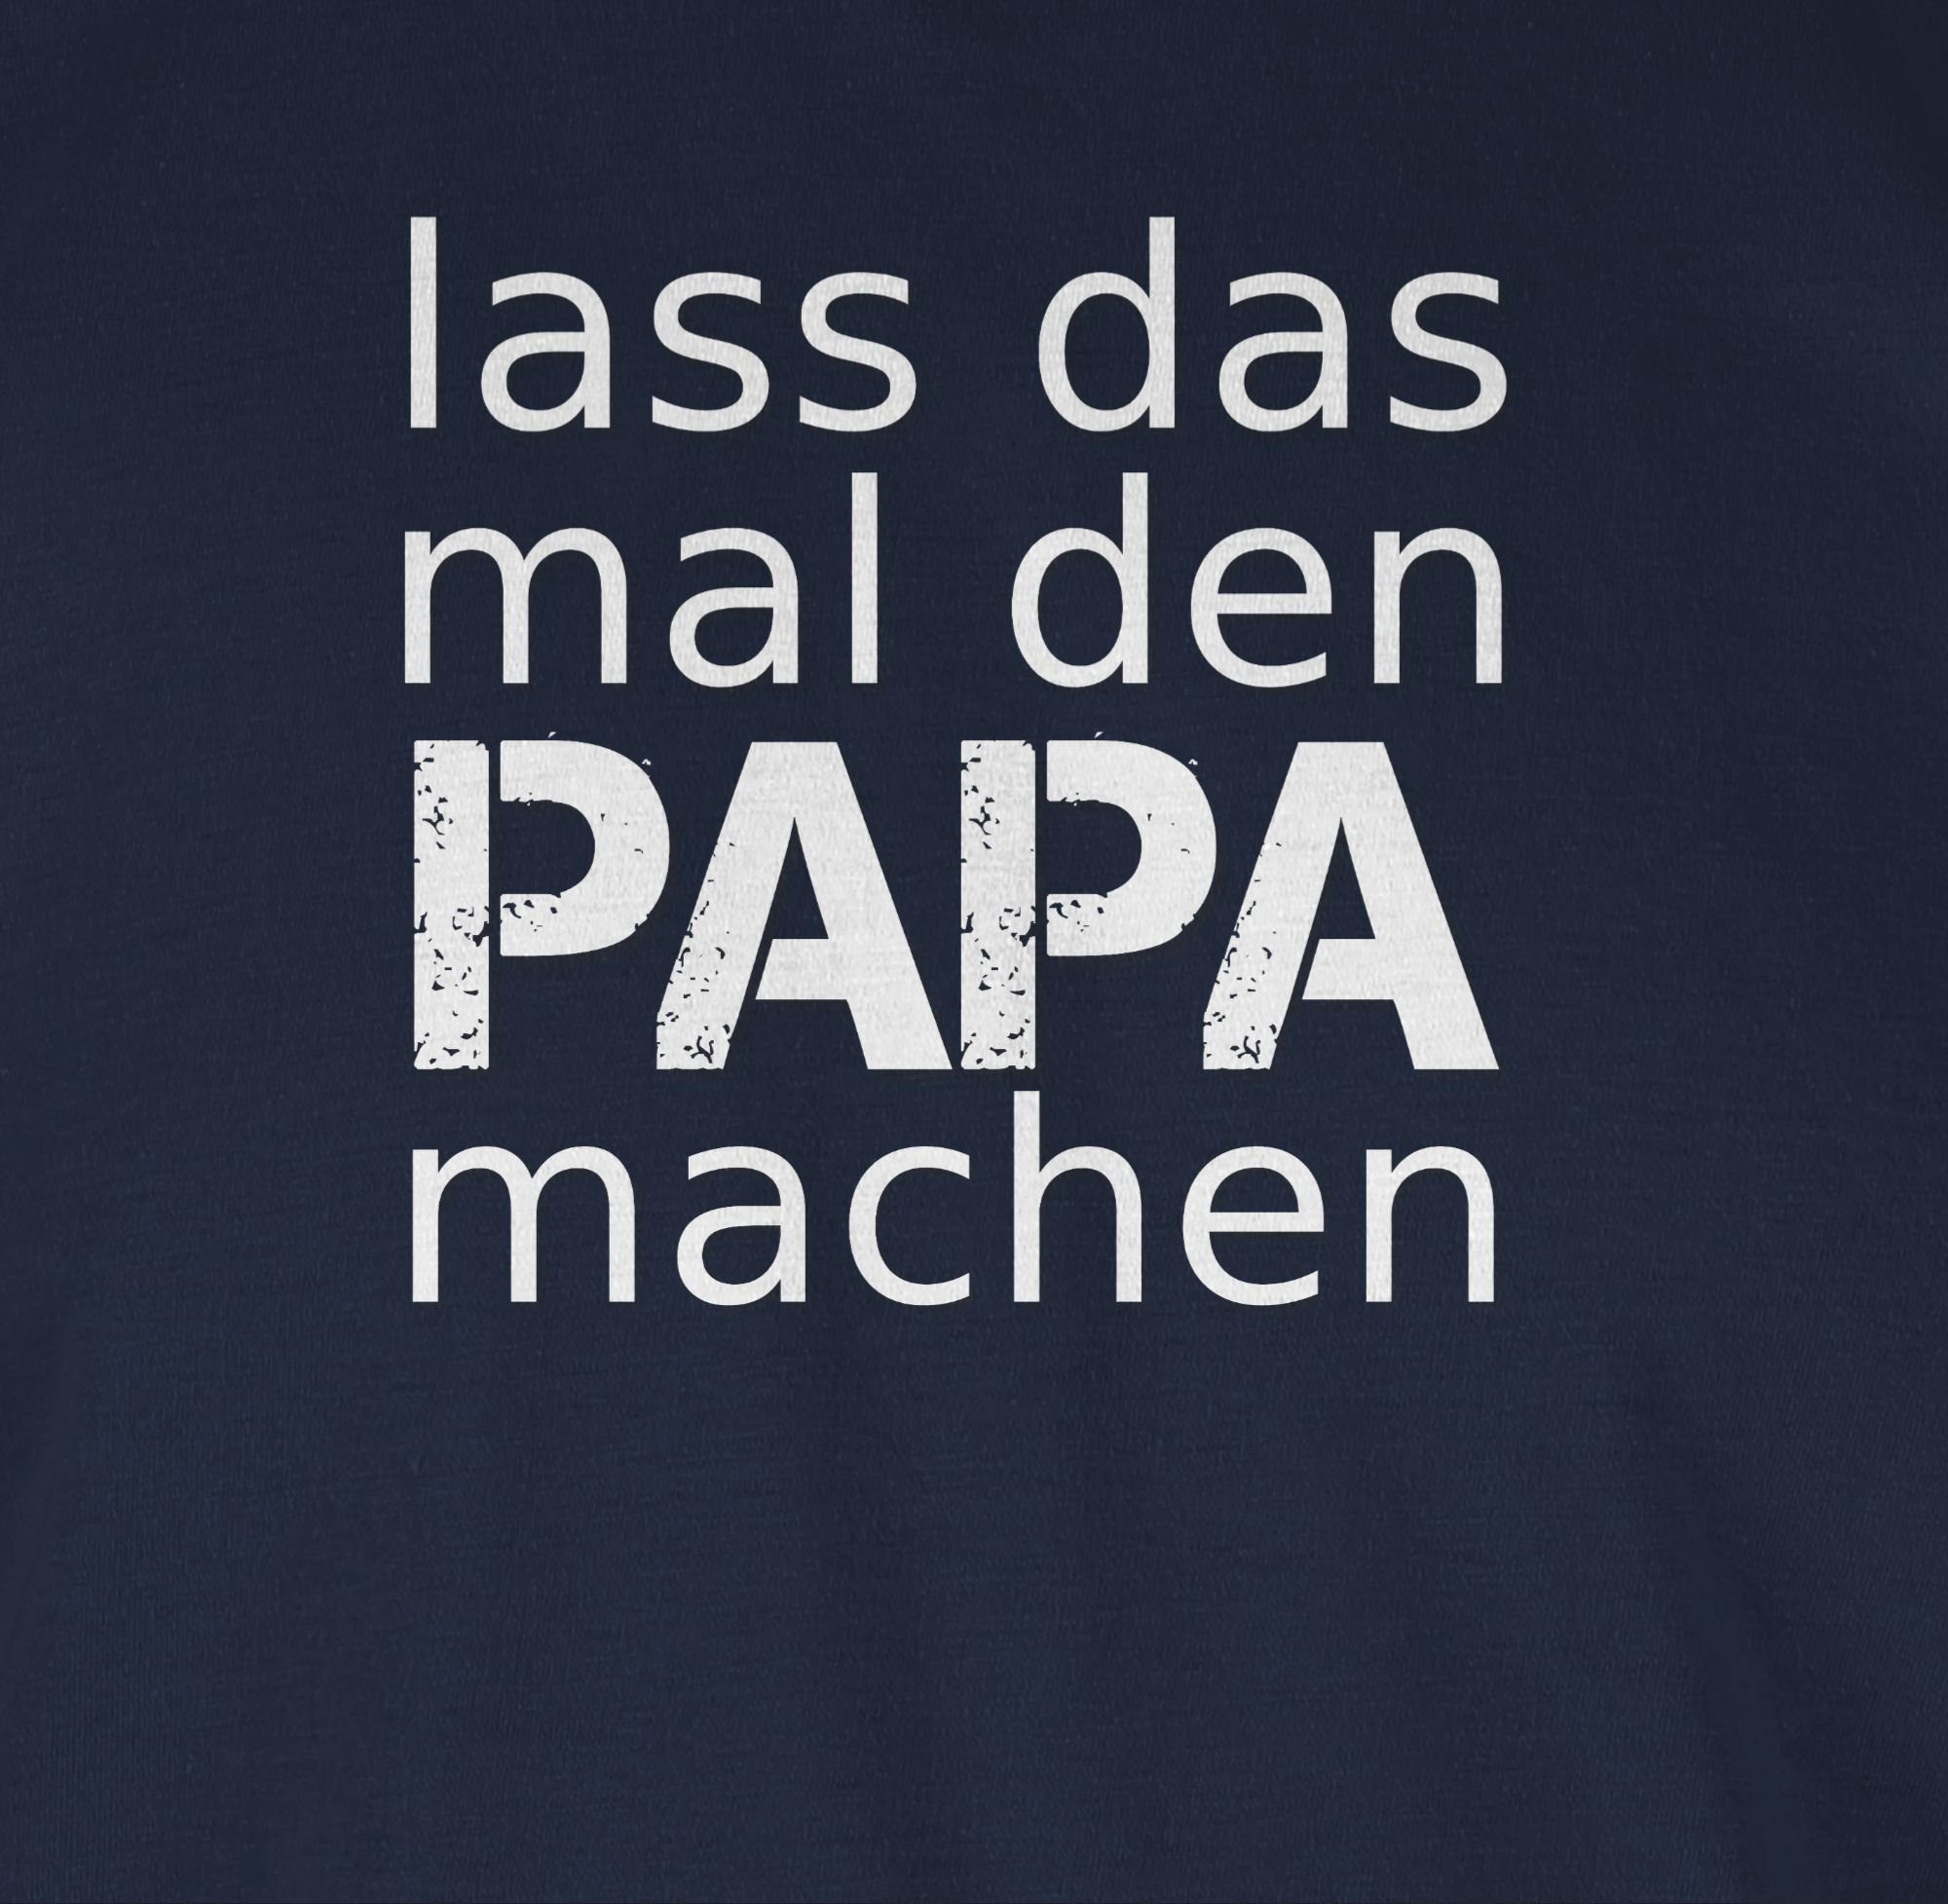 Vatertag T-Shirt Blau Lass Geschenk machen Navy 2 Papa für Shirtracer den Papa das mal